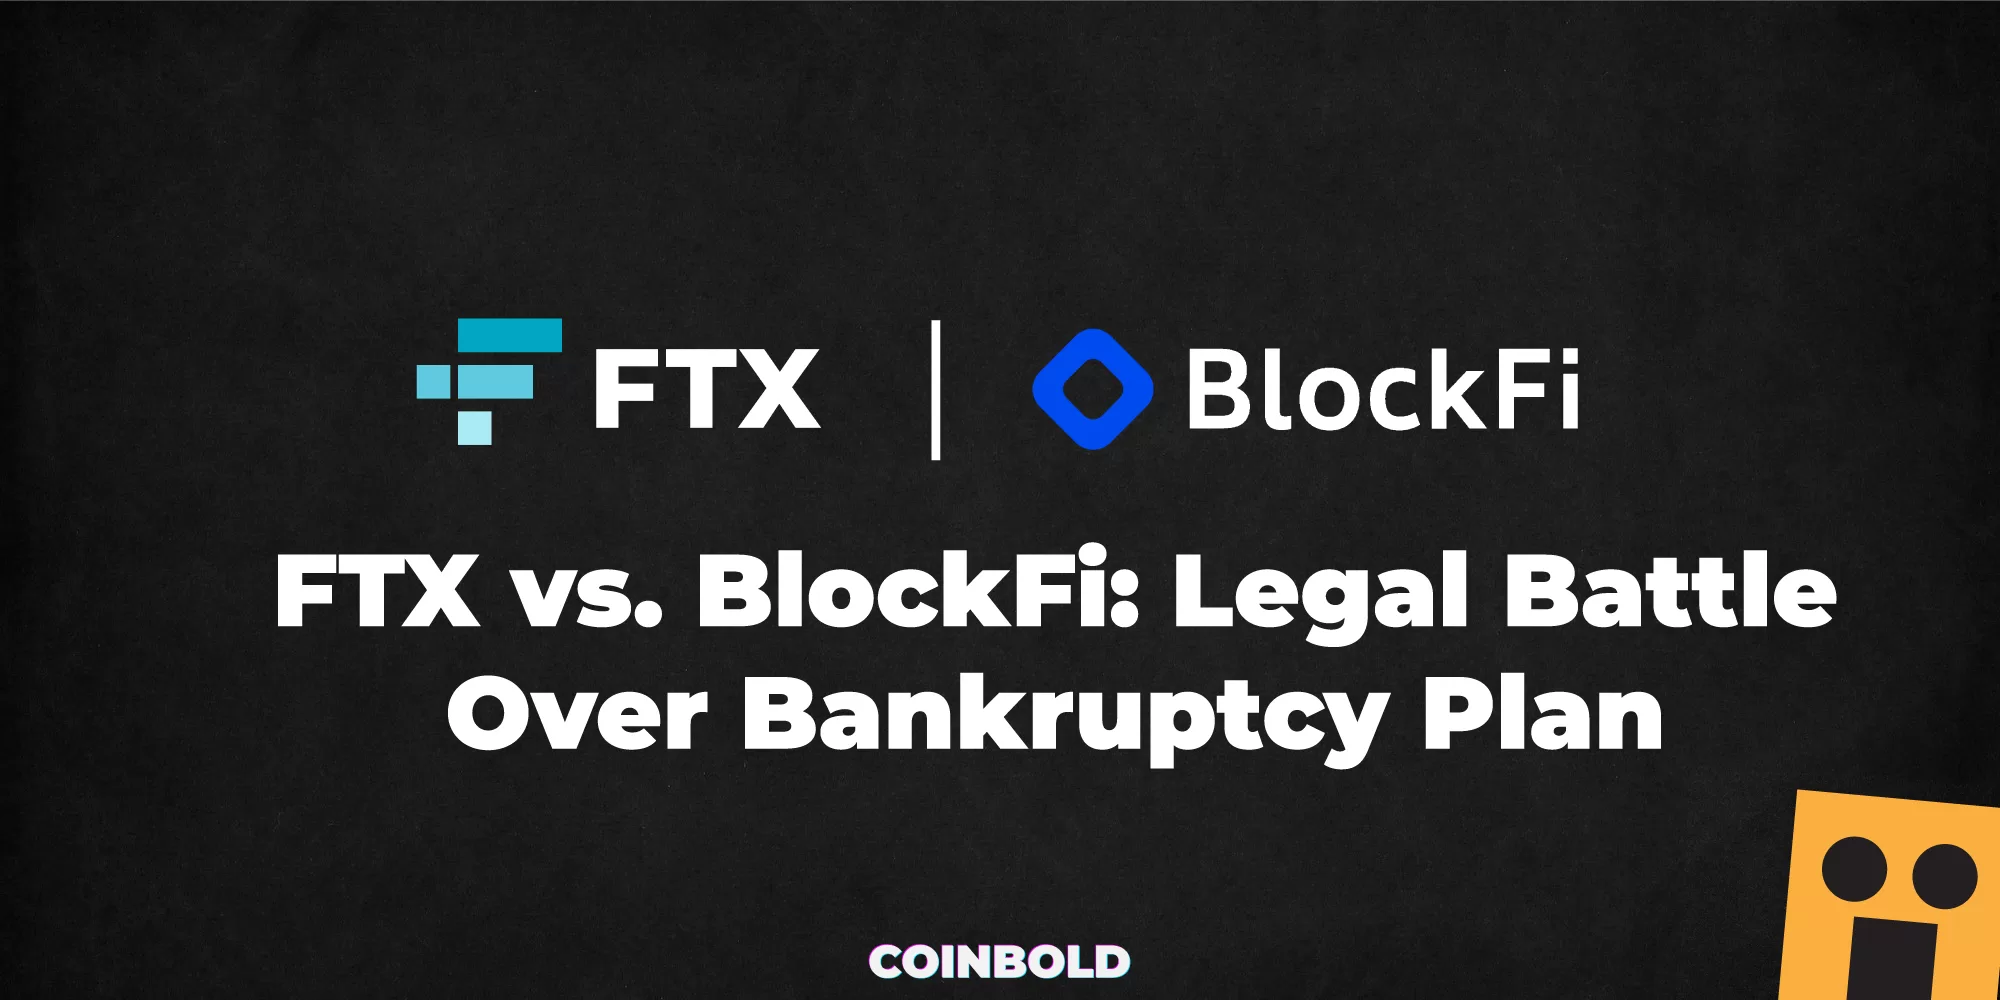 FTX vs. BlockFi: Legal Battle Over Bankruptcy Plan